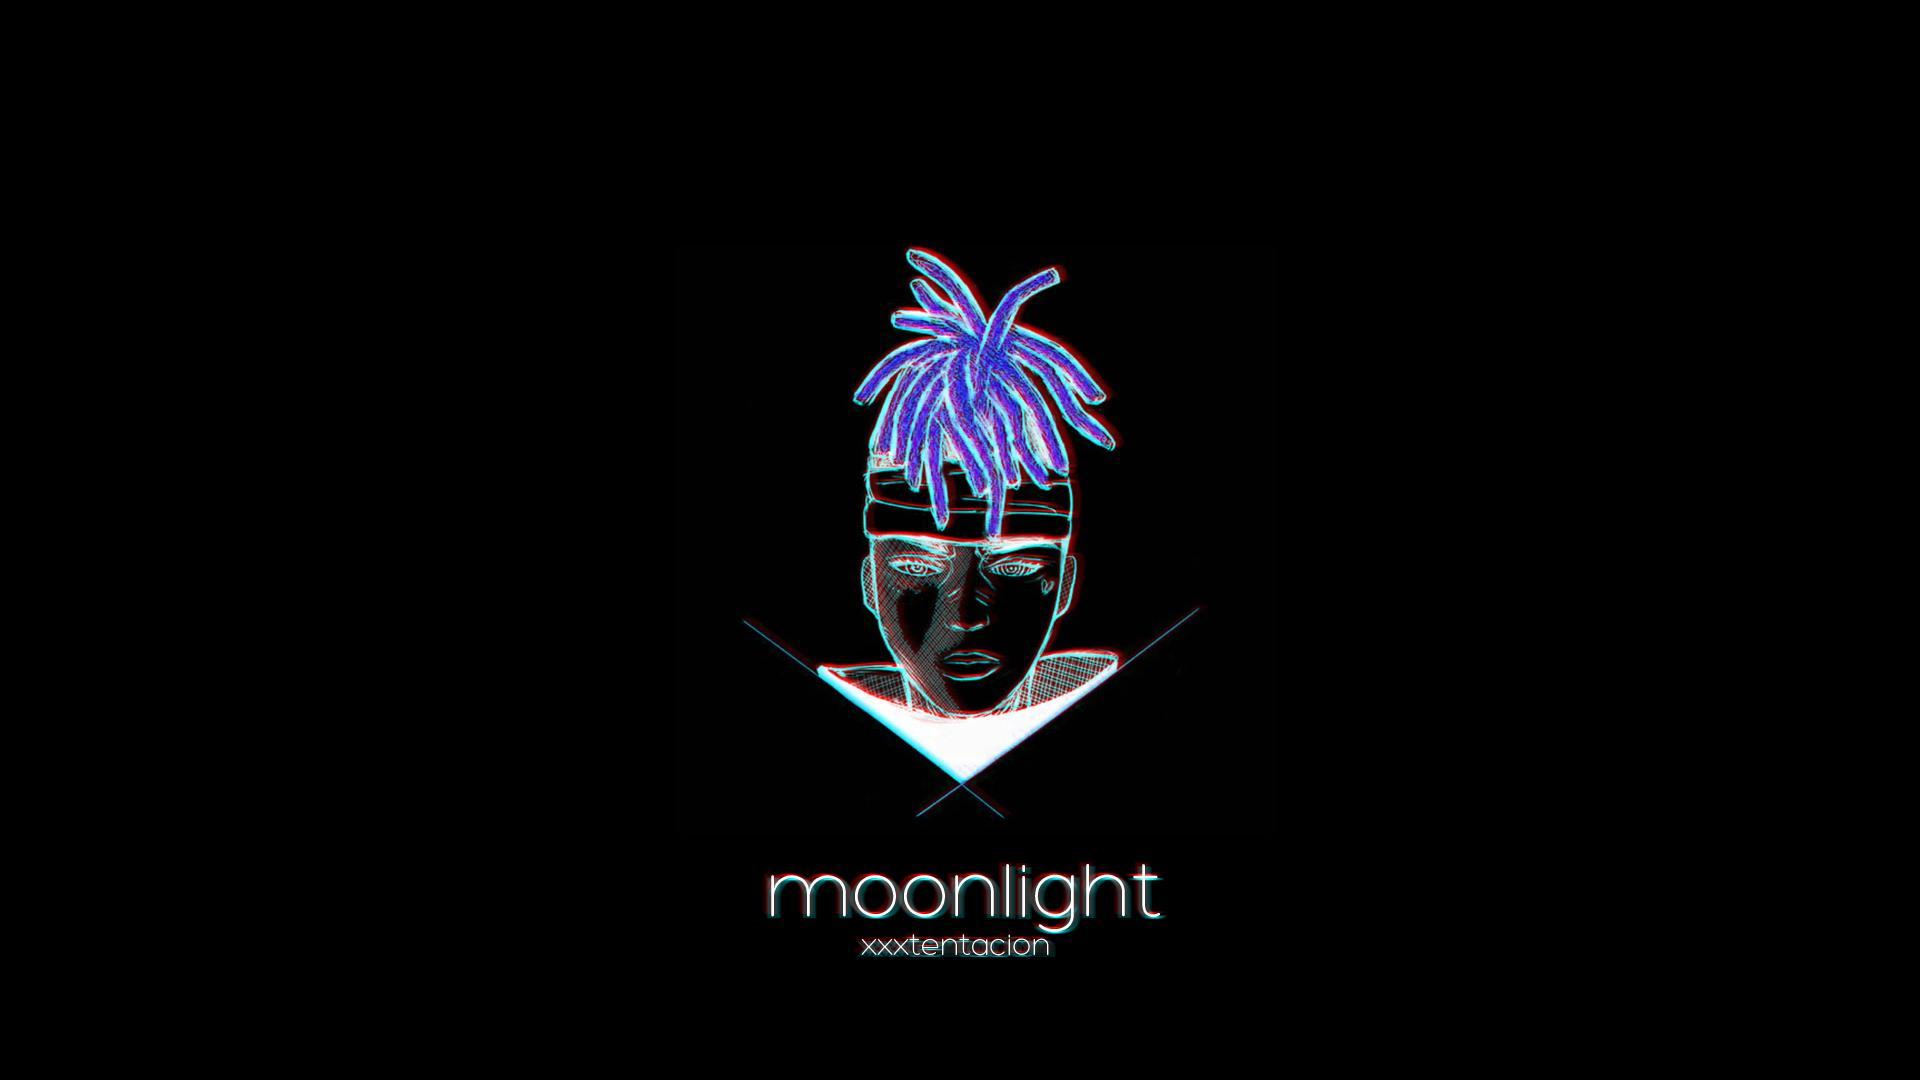 xxxtentacion moonlight 1 hour